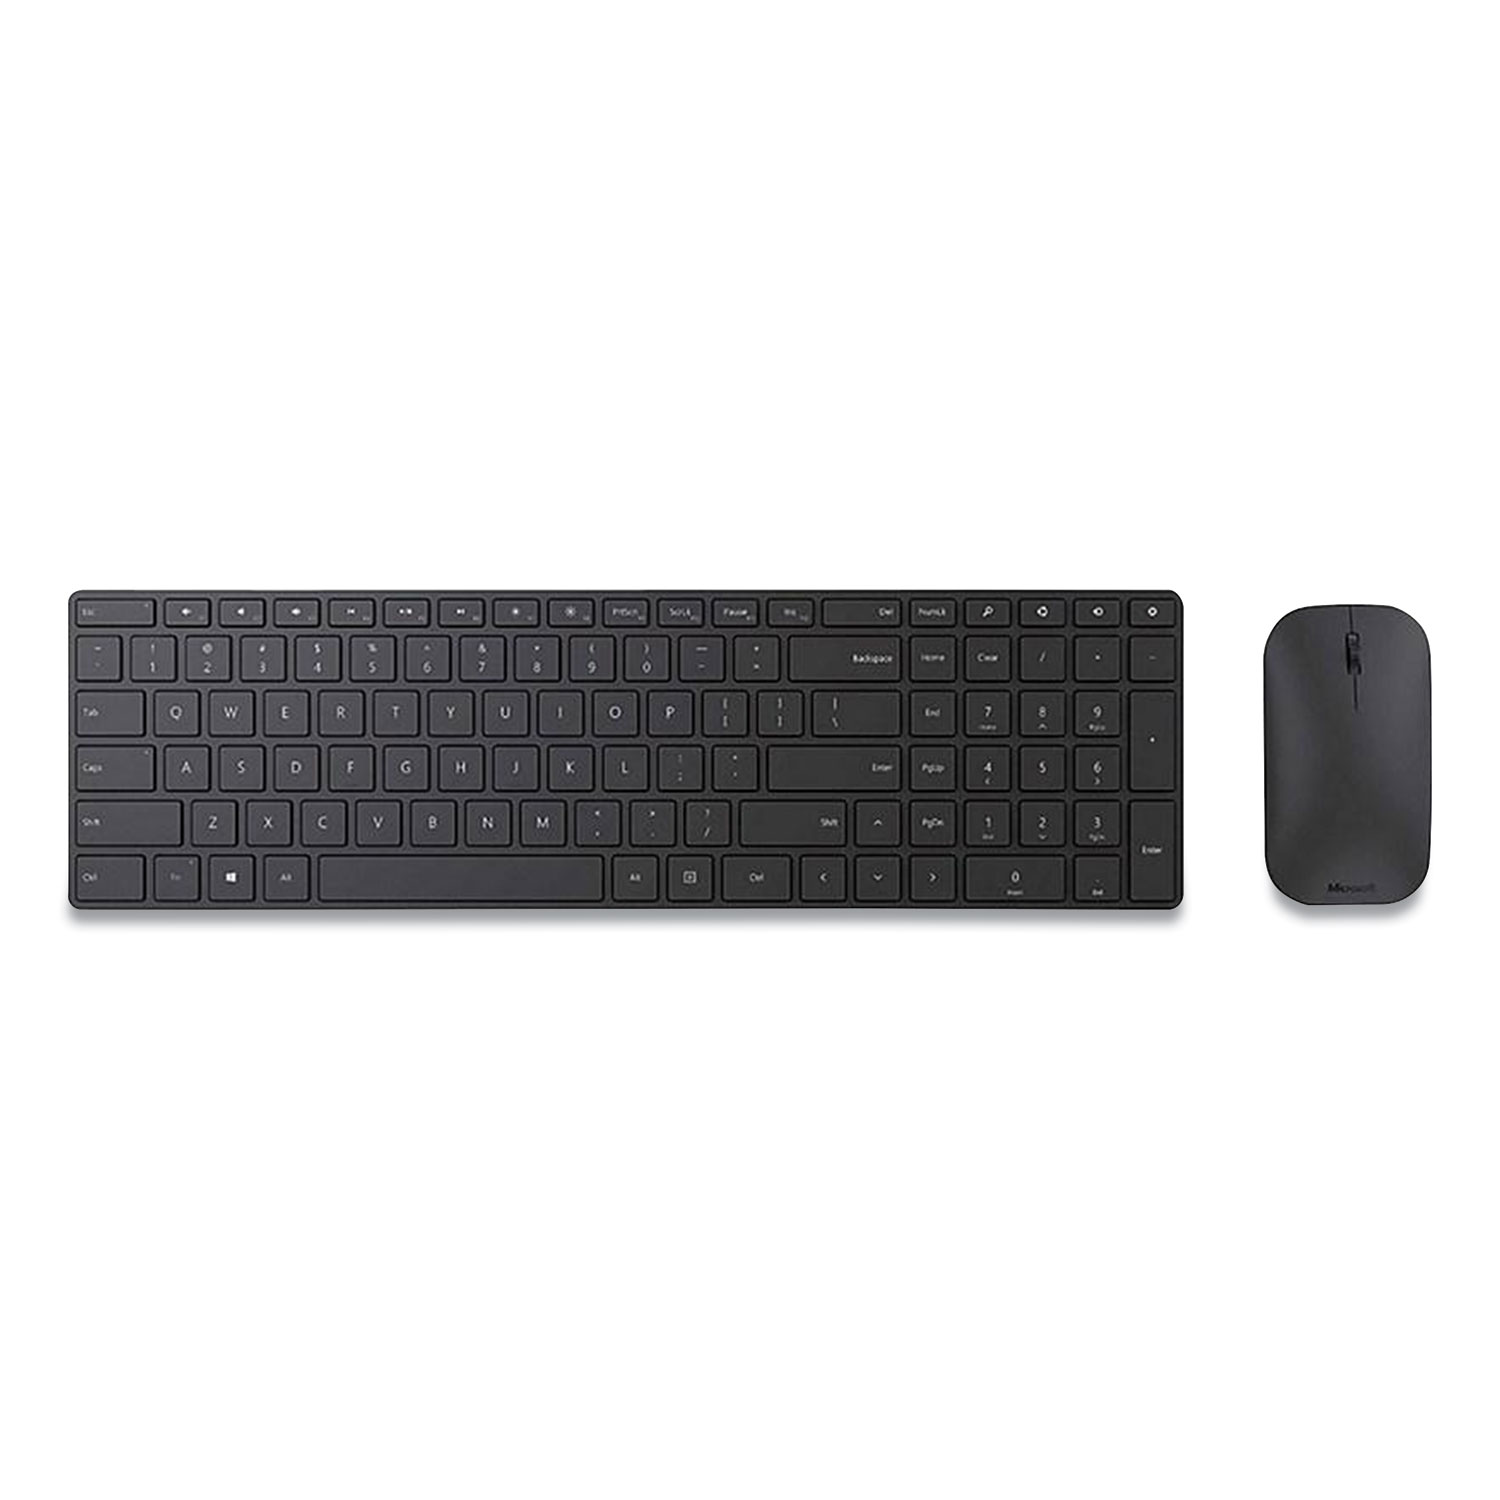  Microsoft 7N9-00001 Designer Desktop Wireless Keyboard and Mouse Combo, Black (MSF1668667) 